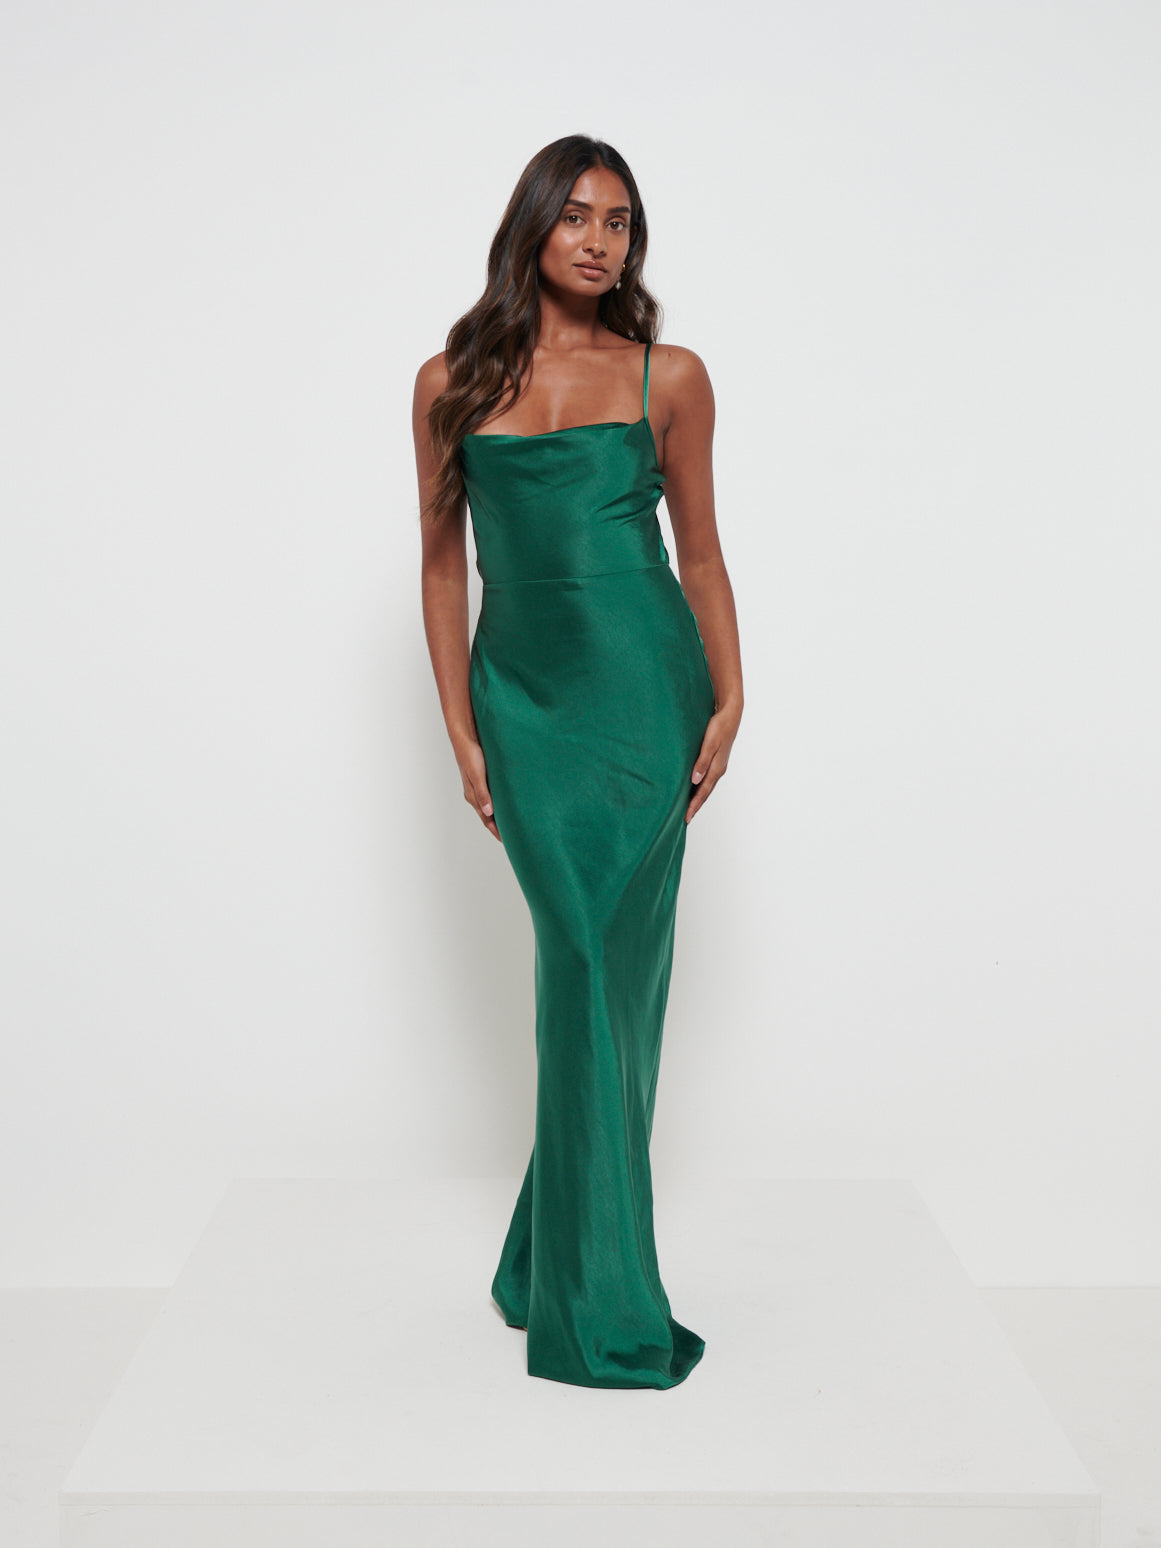 Uptown Girl Emerald Green Satin One Shoulder Dress – Shop the Mint